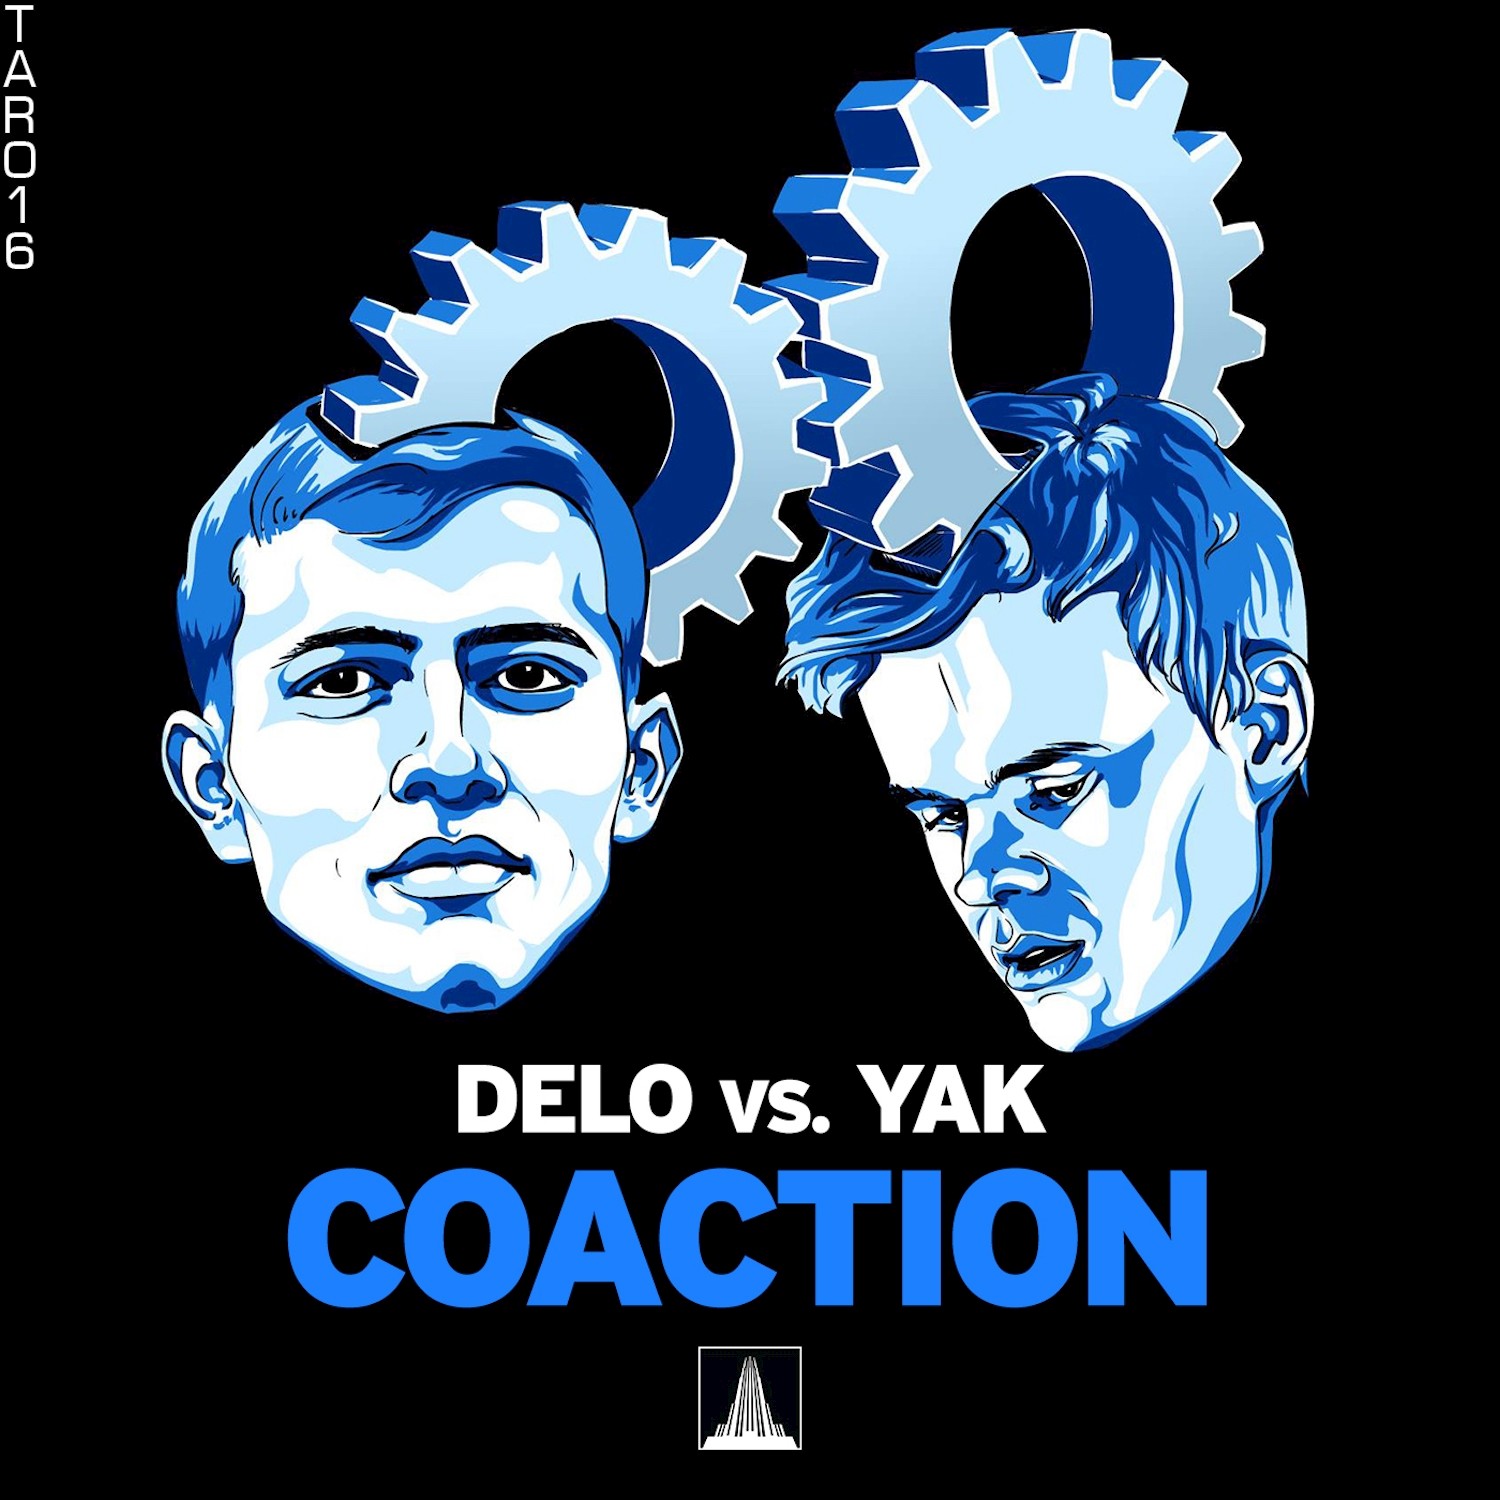 Coaction (Delo vs. Yak)